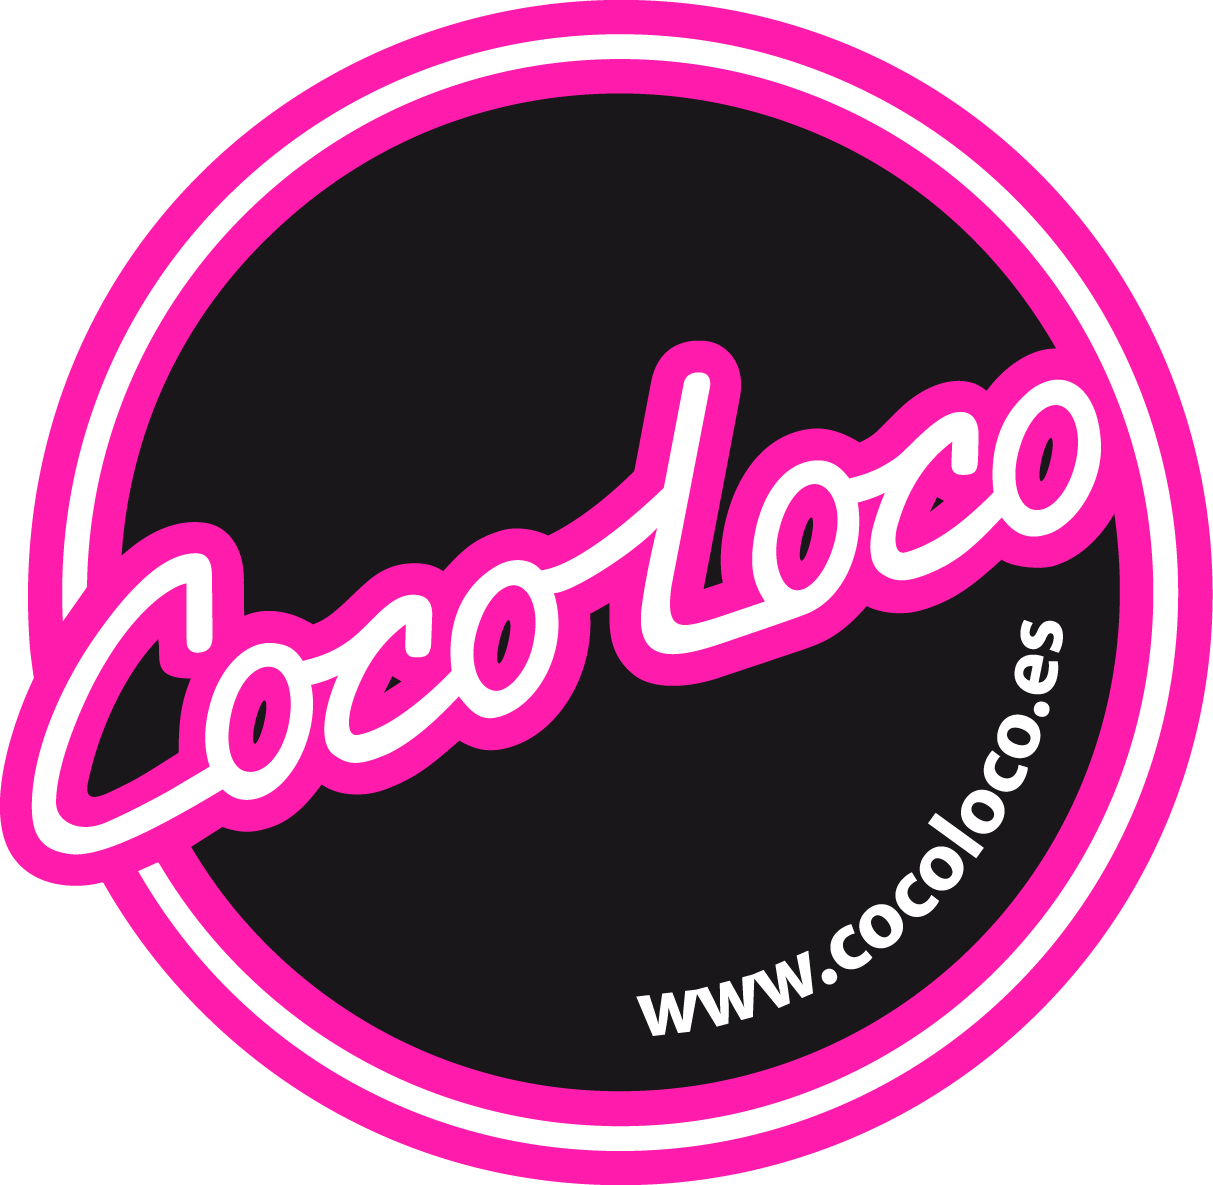 CocoLoco Logo photo - 1